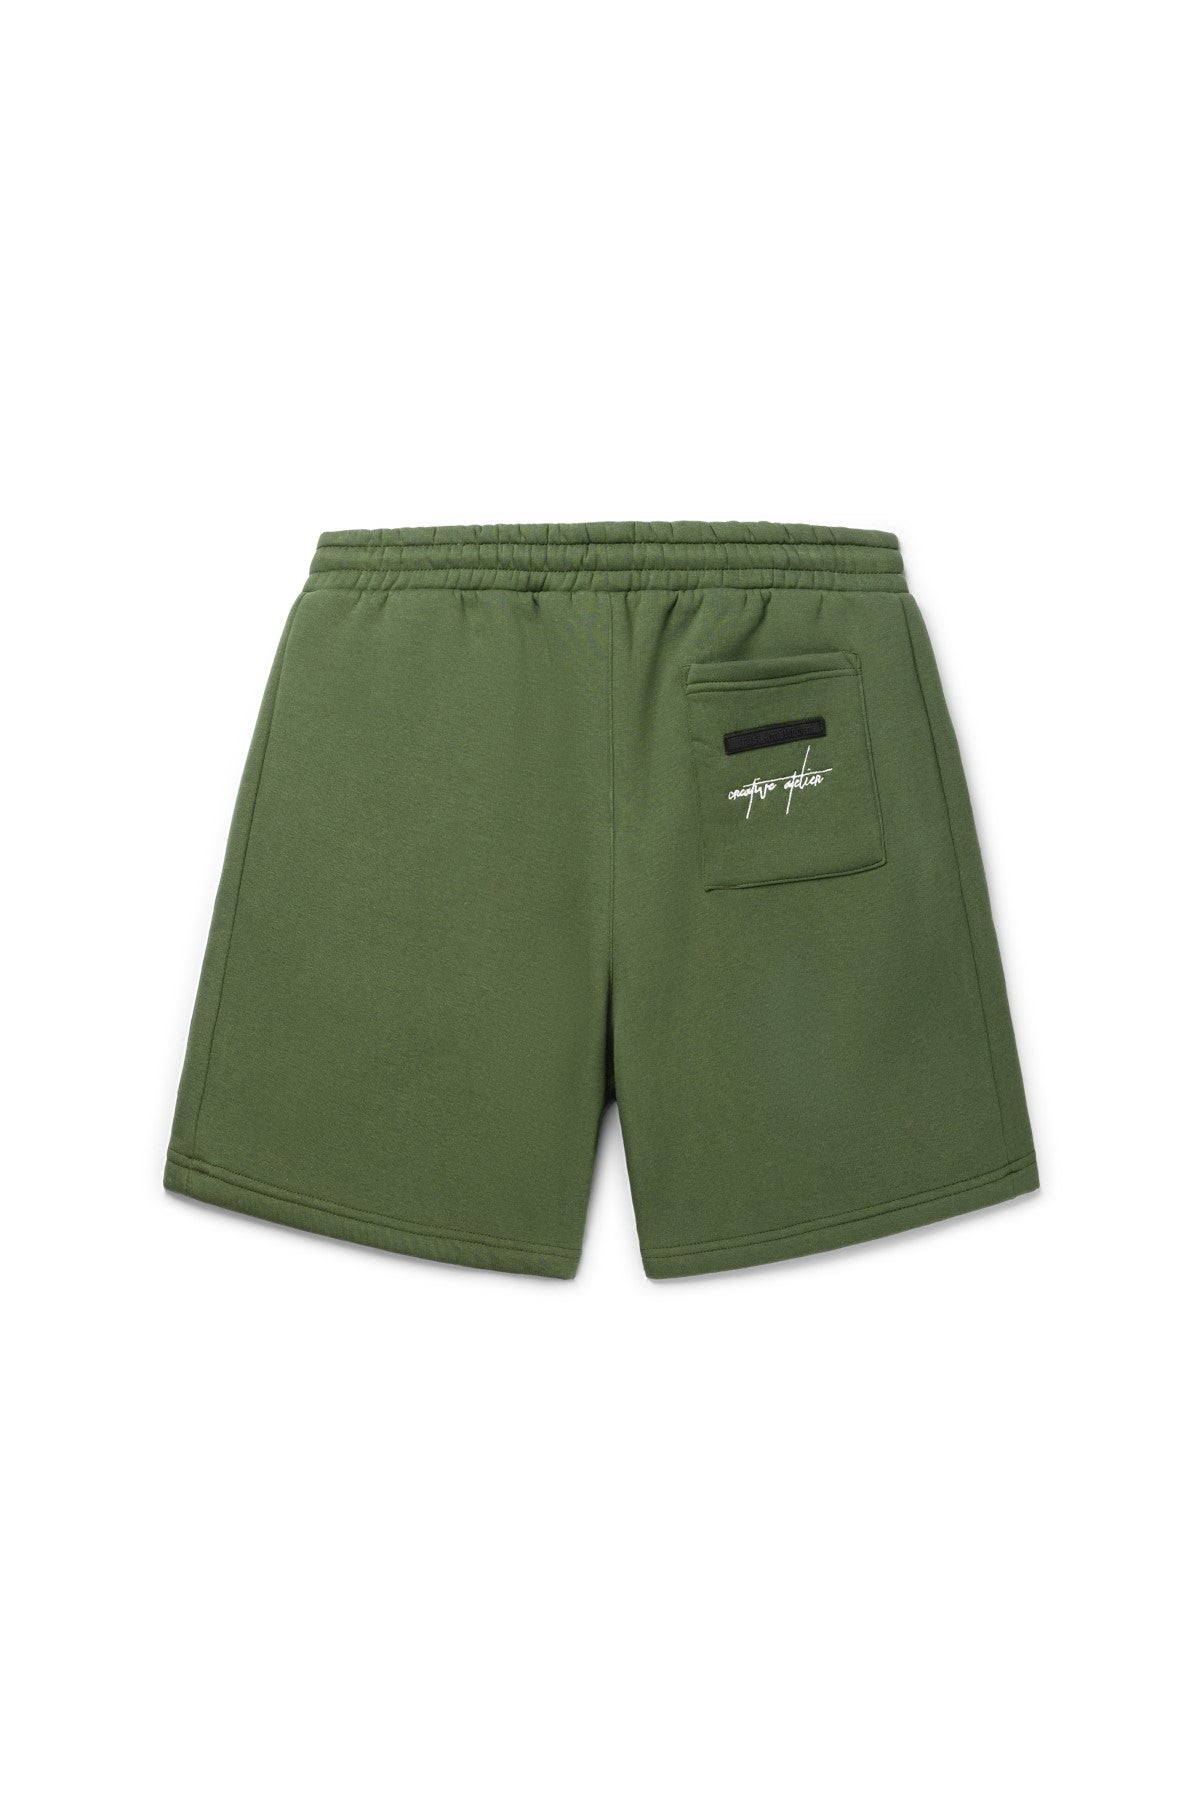 Seasonless Shorts - Army Green